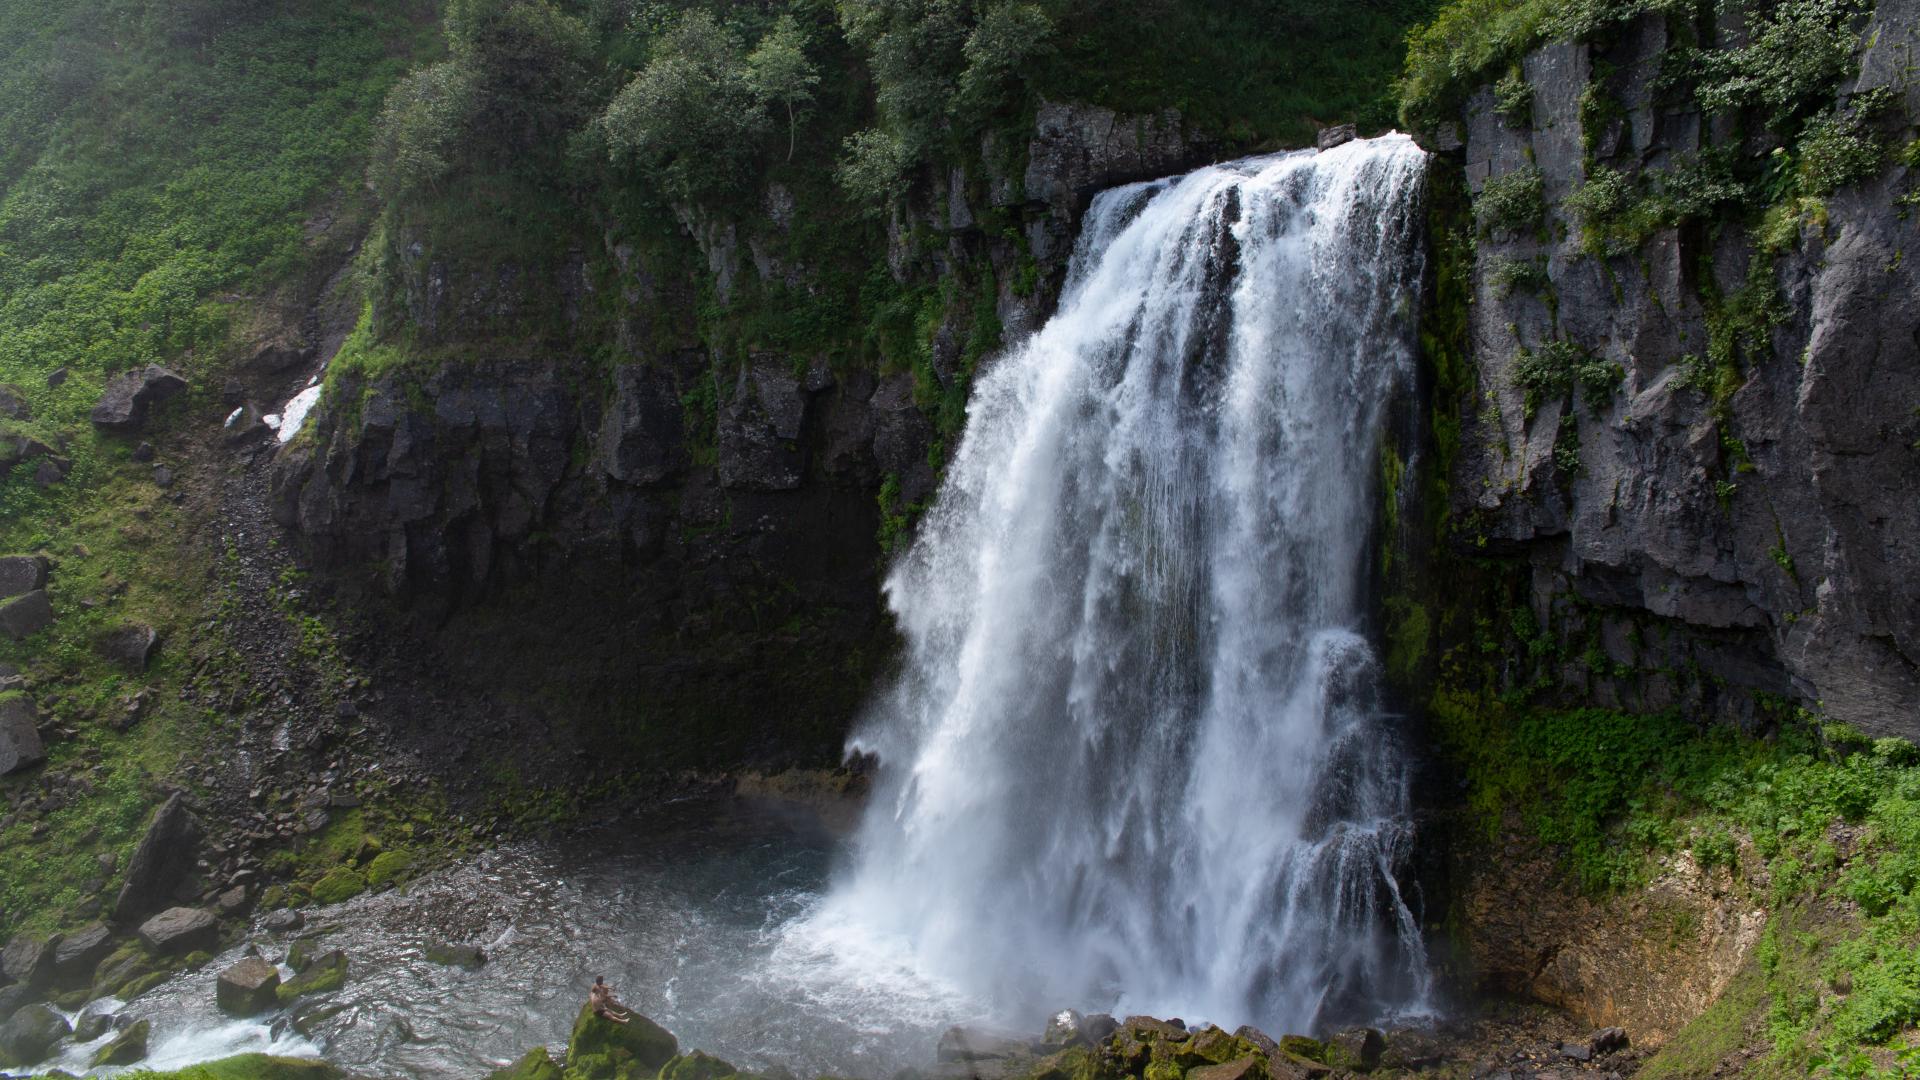 Spokoinyi Waterfall (Спокойный)